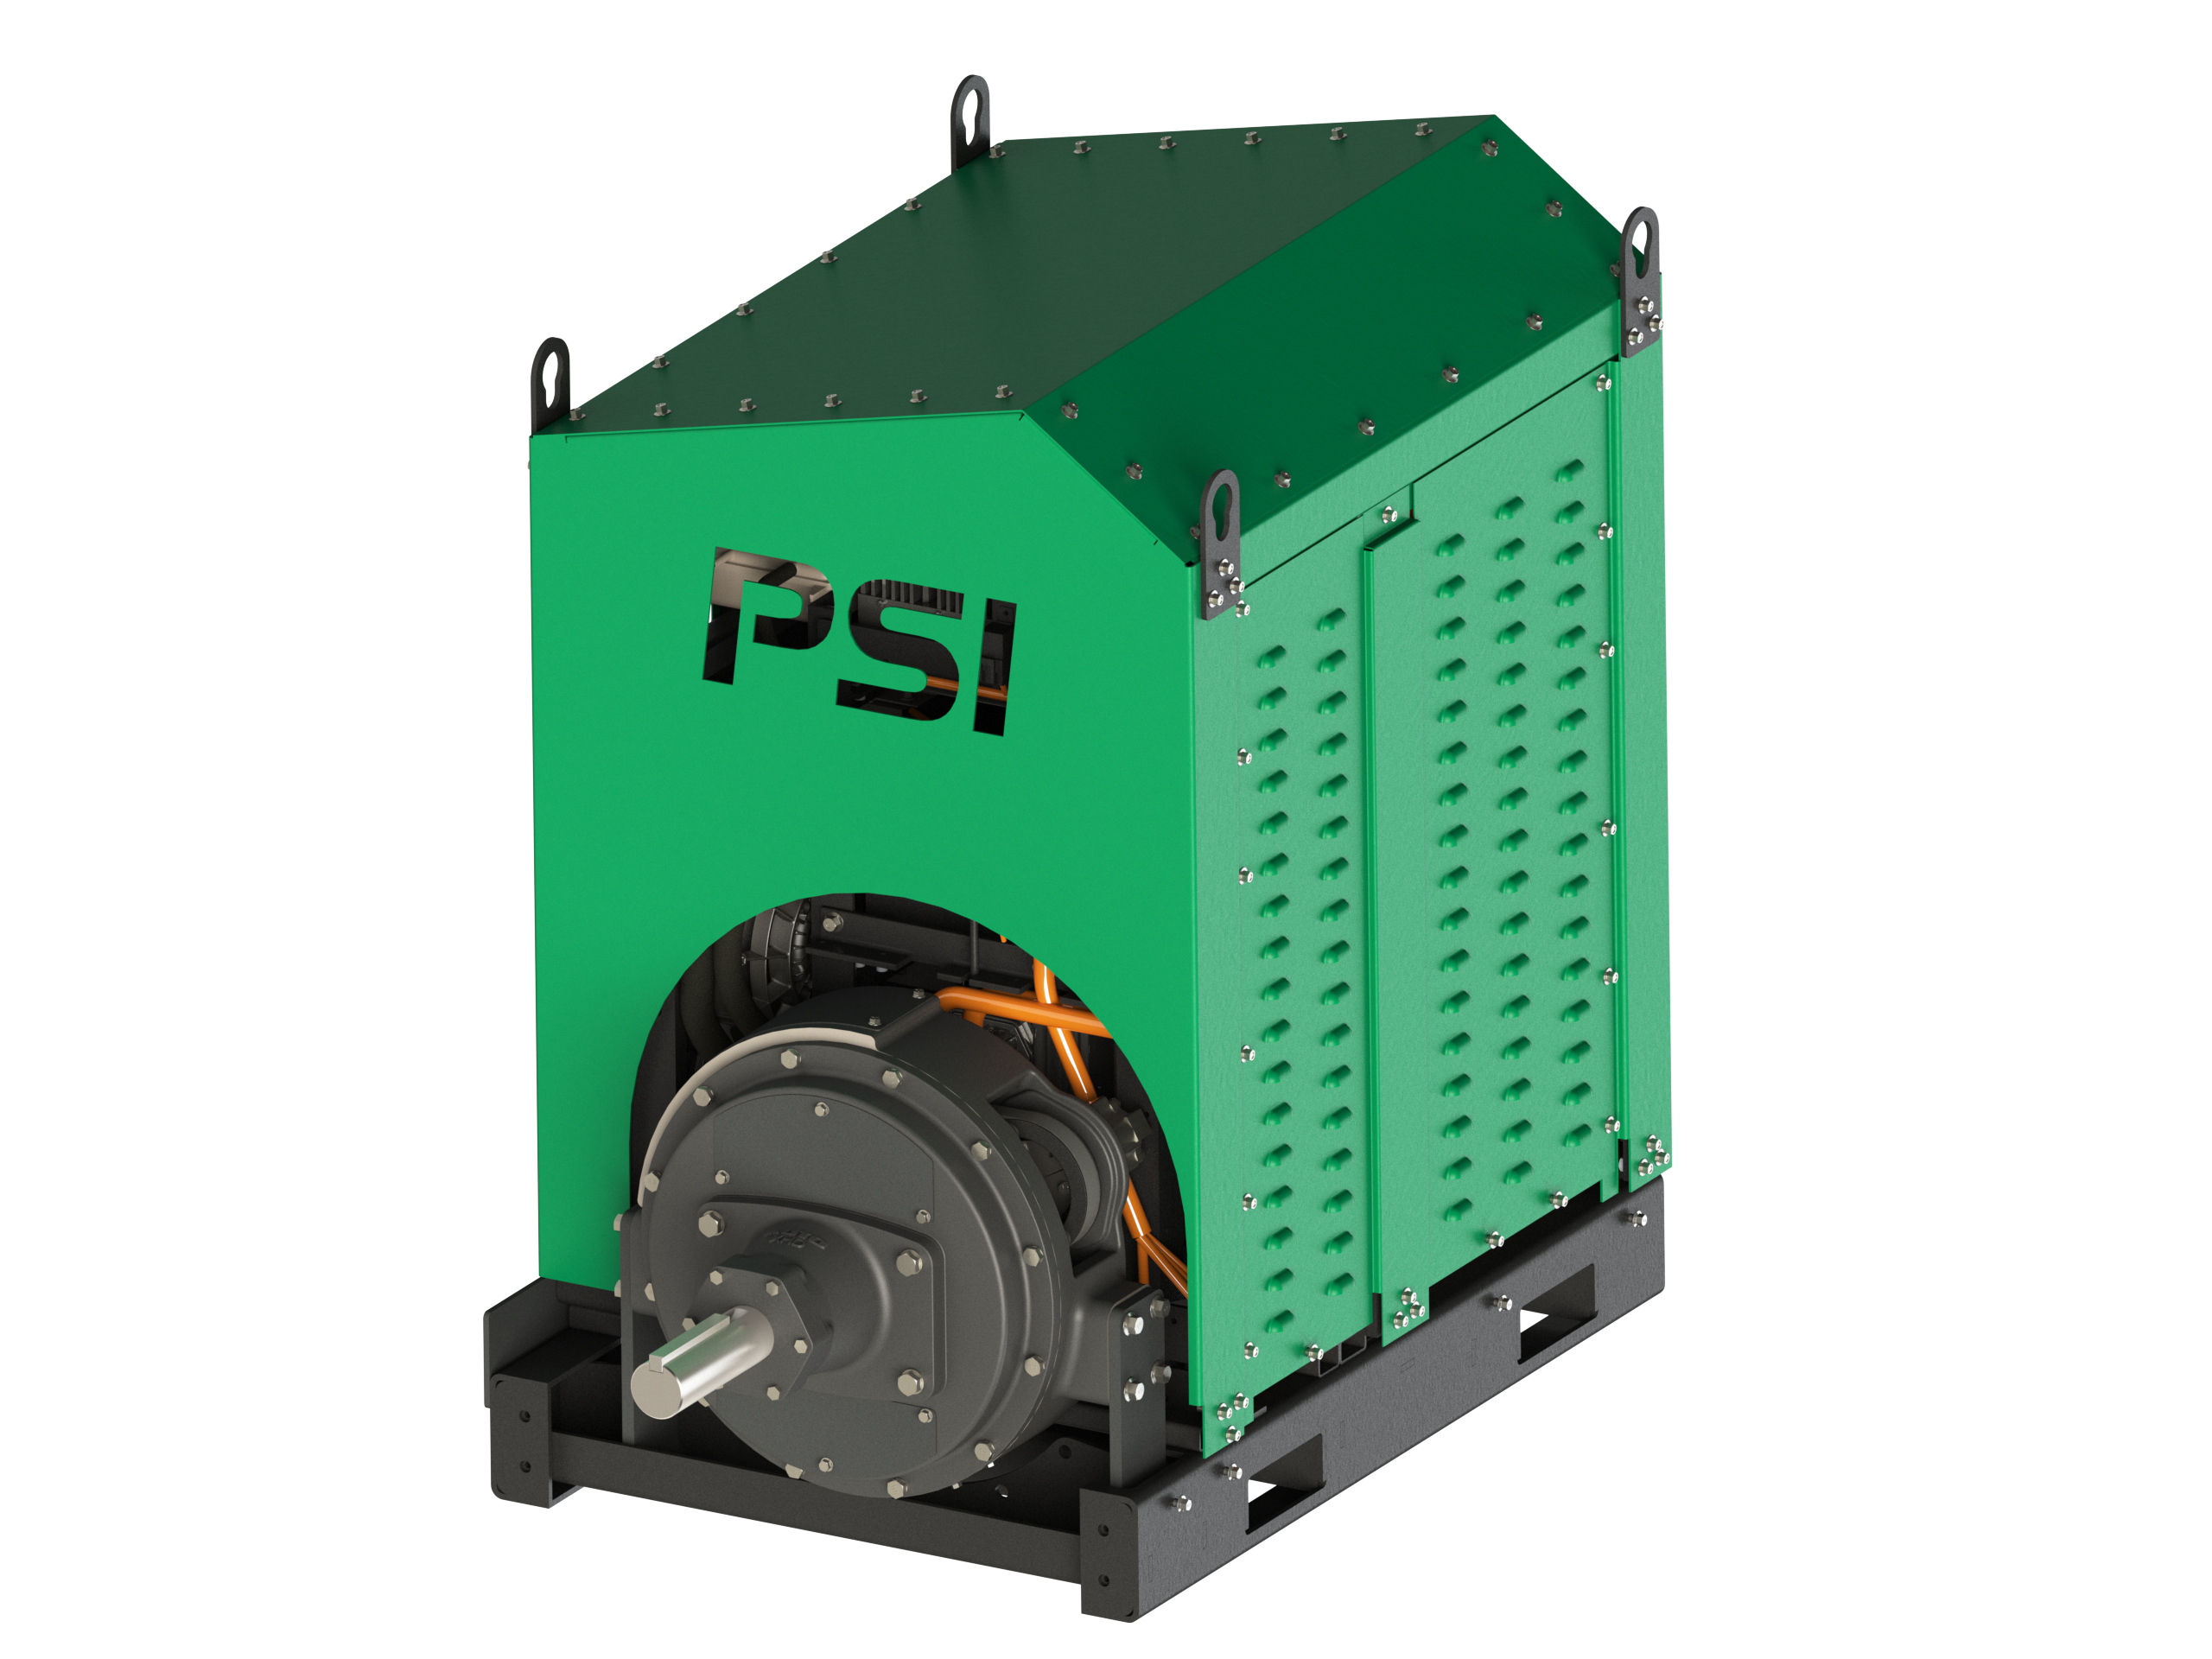 PSI Li-Ion Unit 2